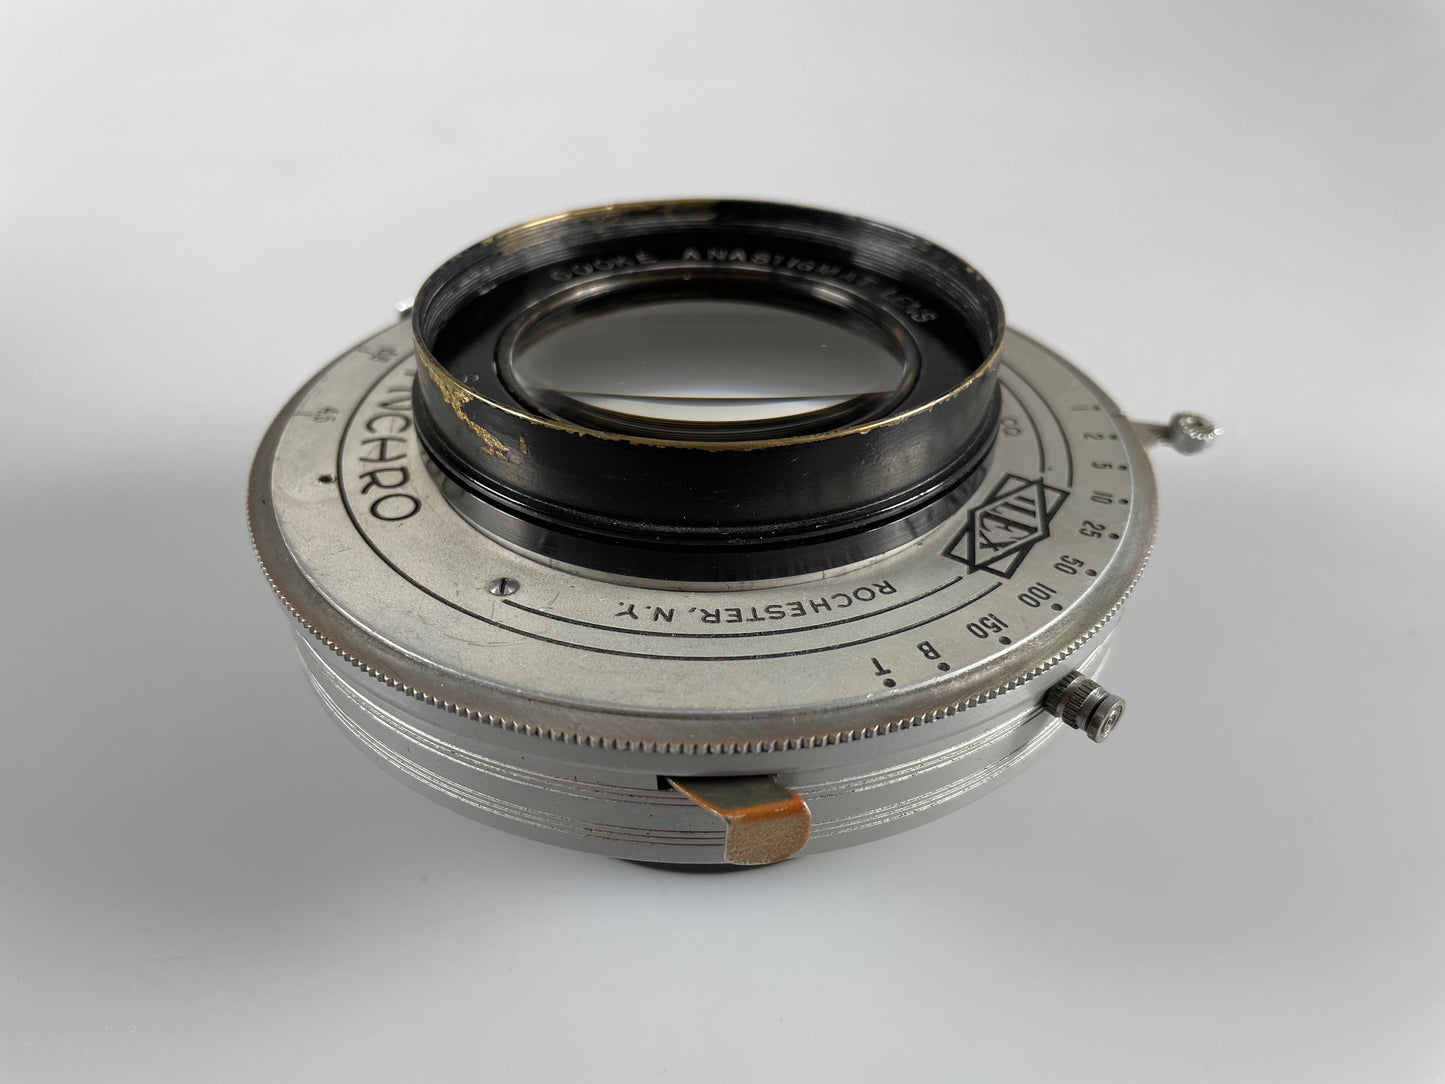 Cooke 8.2 in inch f4.5 Series II lens in Ilex shutter